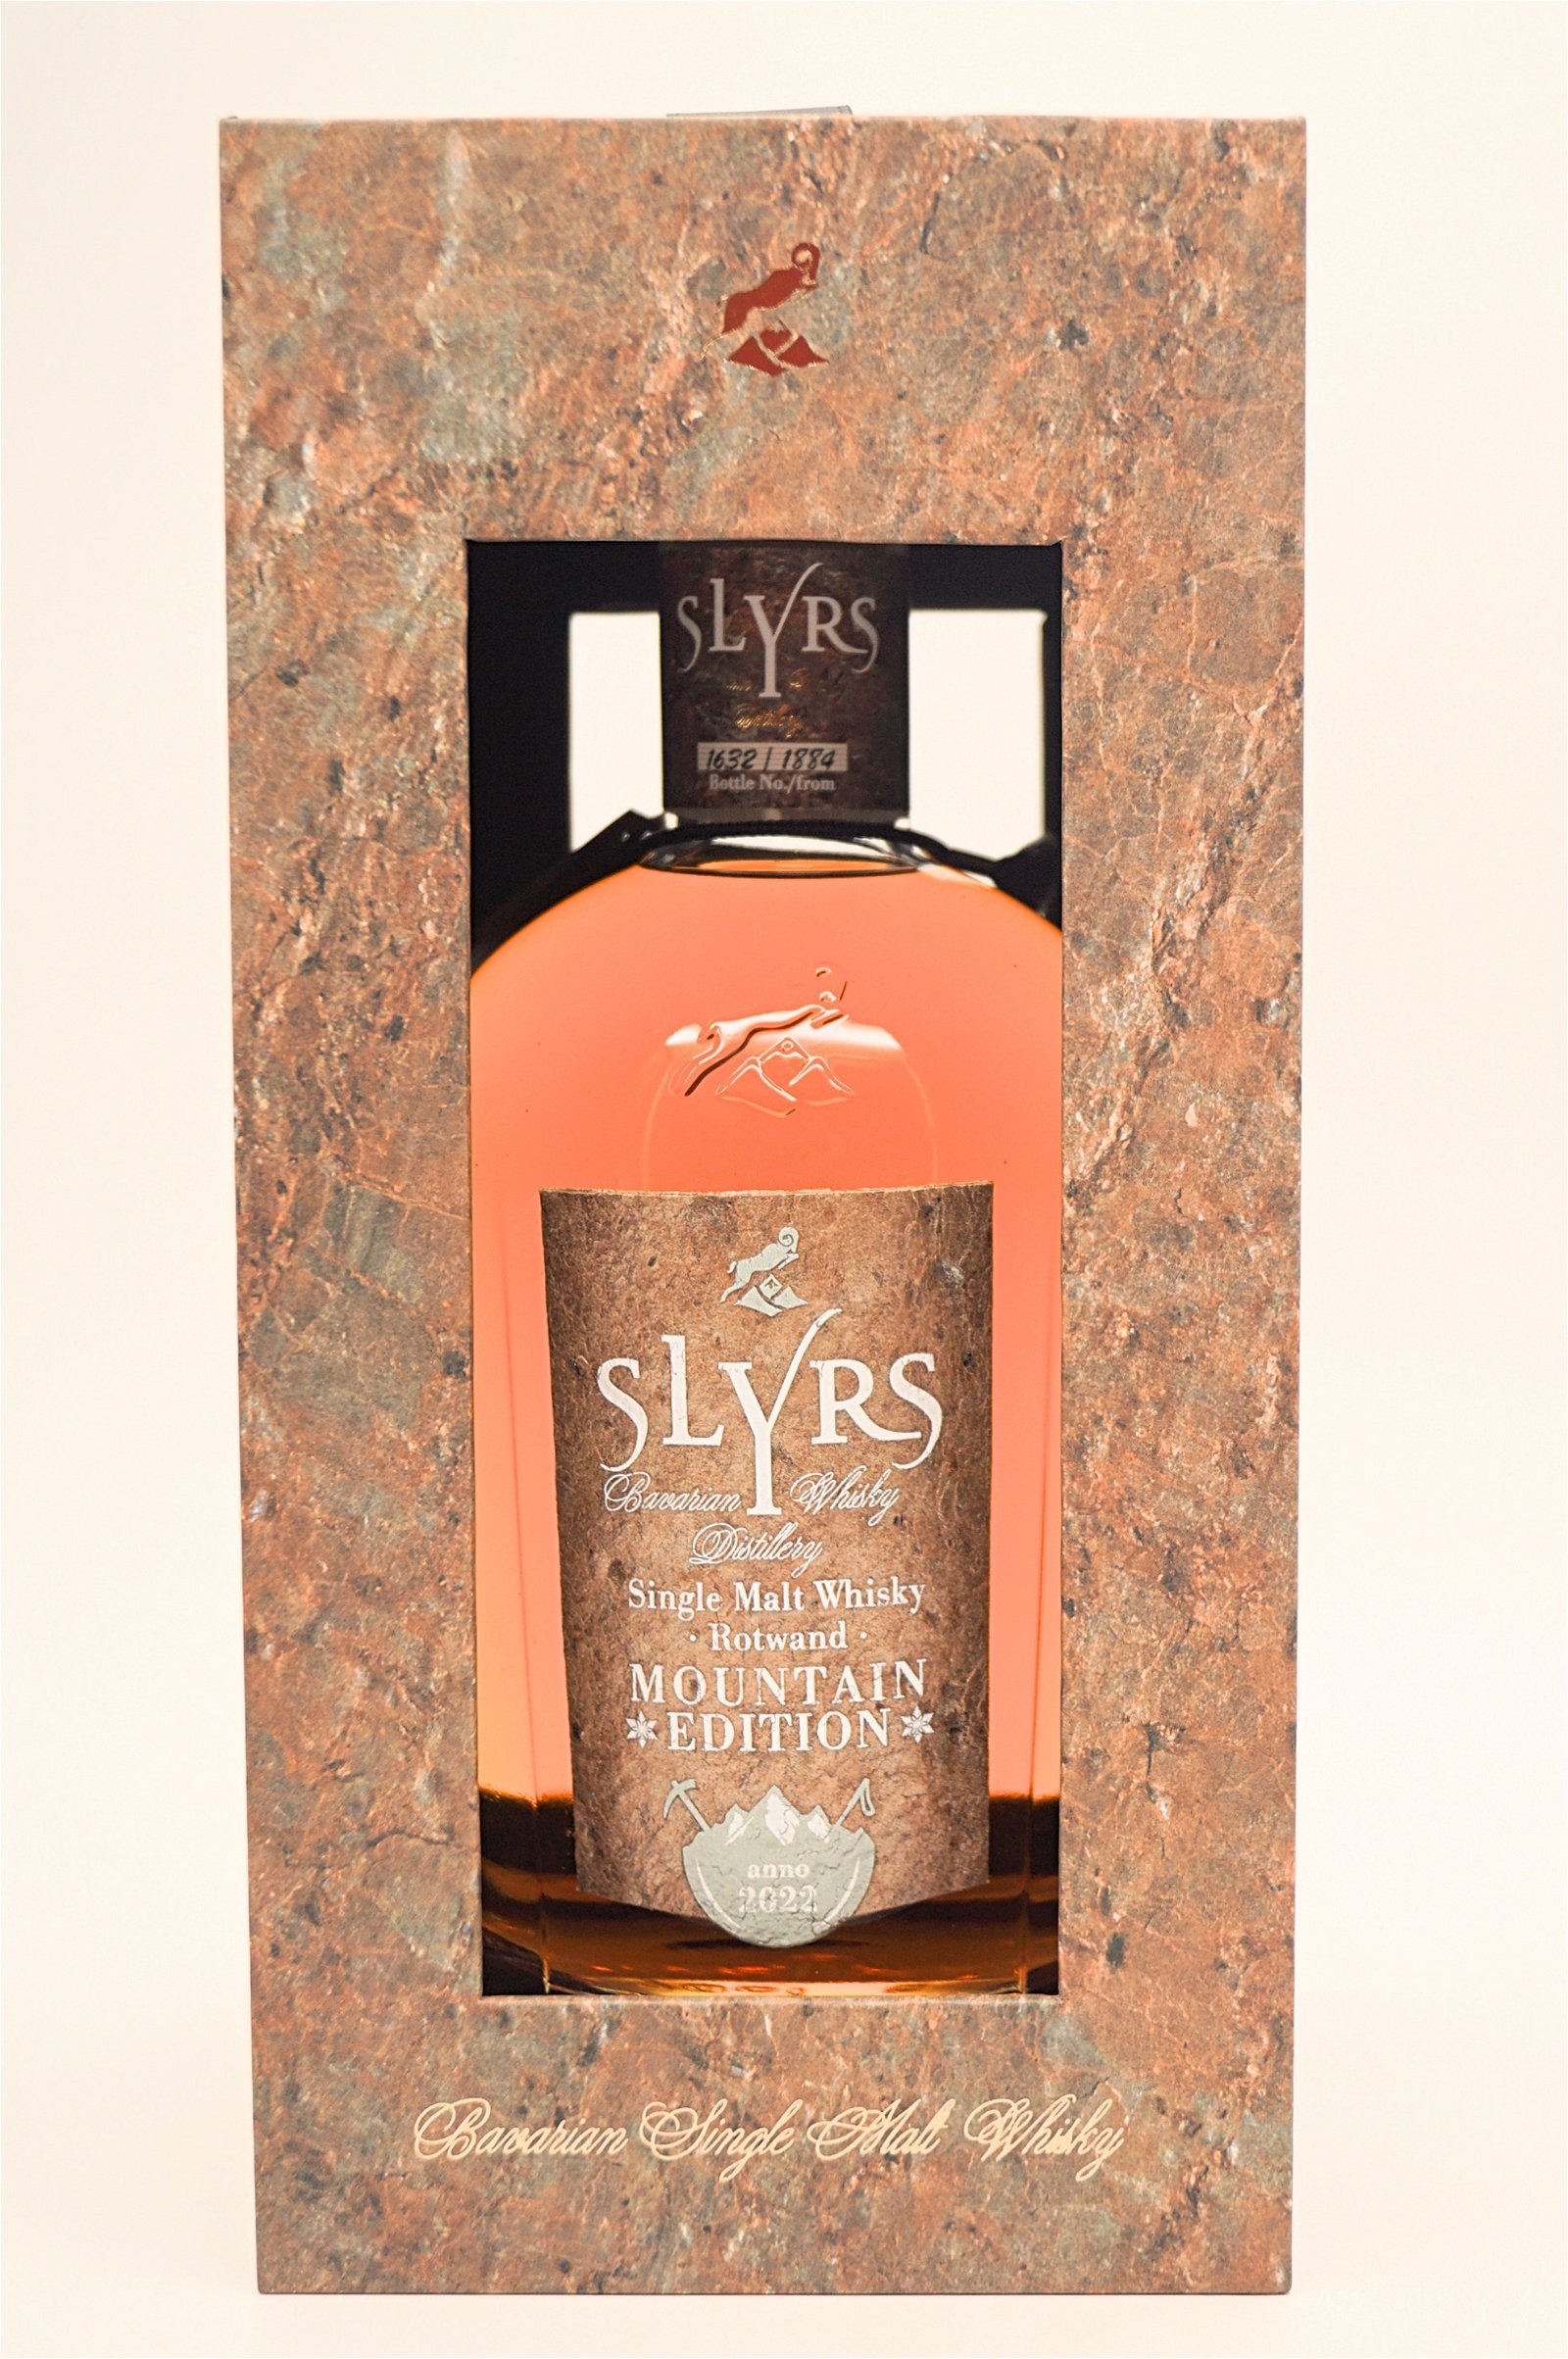 Slyrs Rotwand Mountain Edition Single Malt Whisky